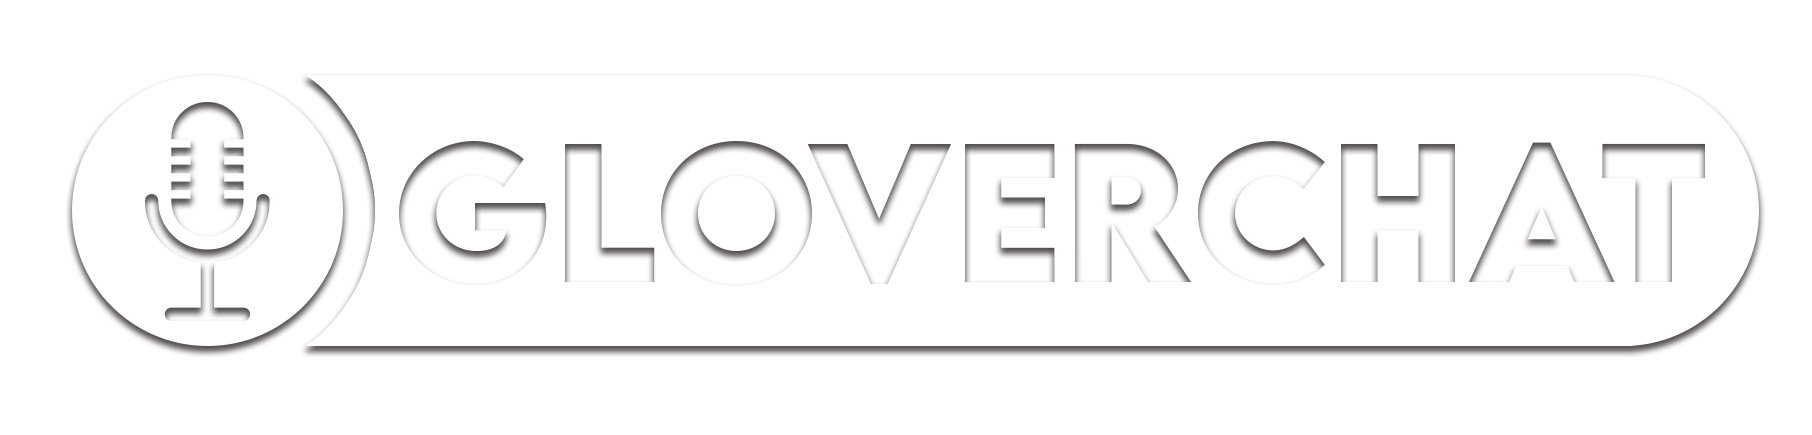 Gloverchat logo